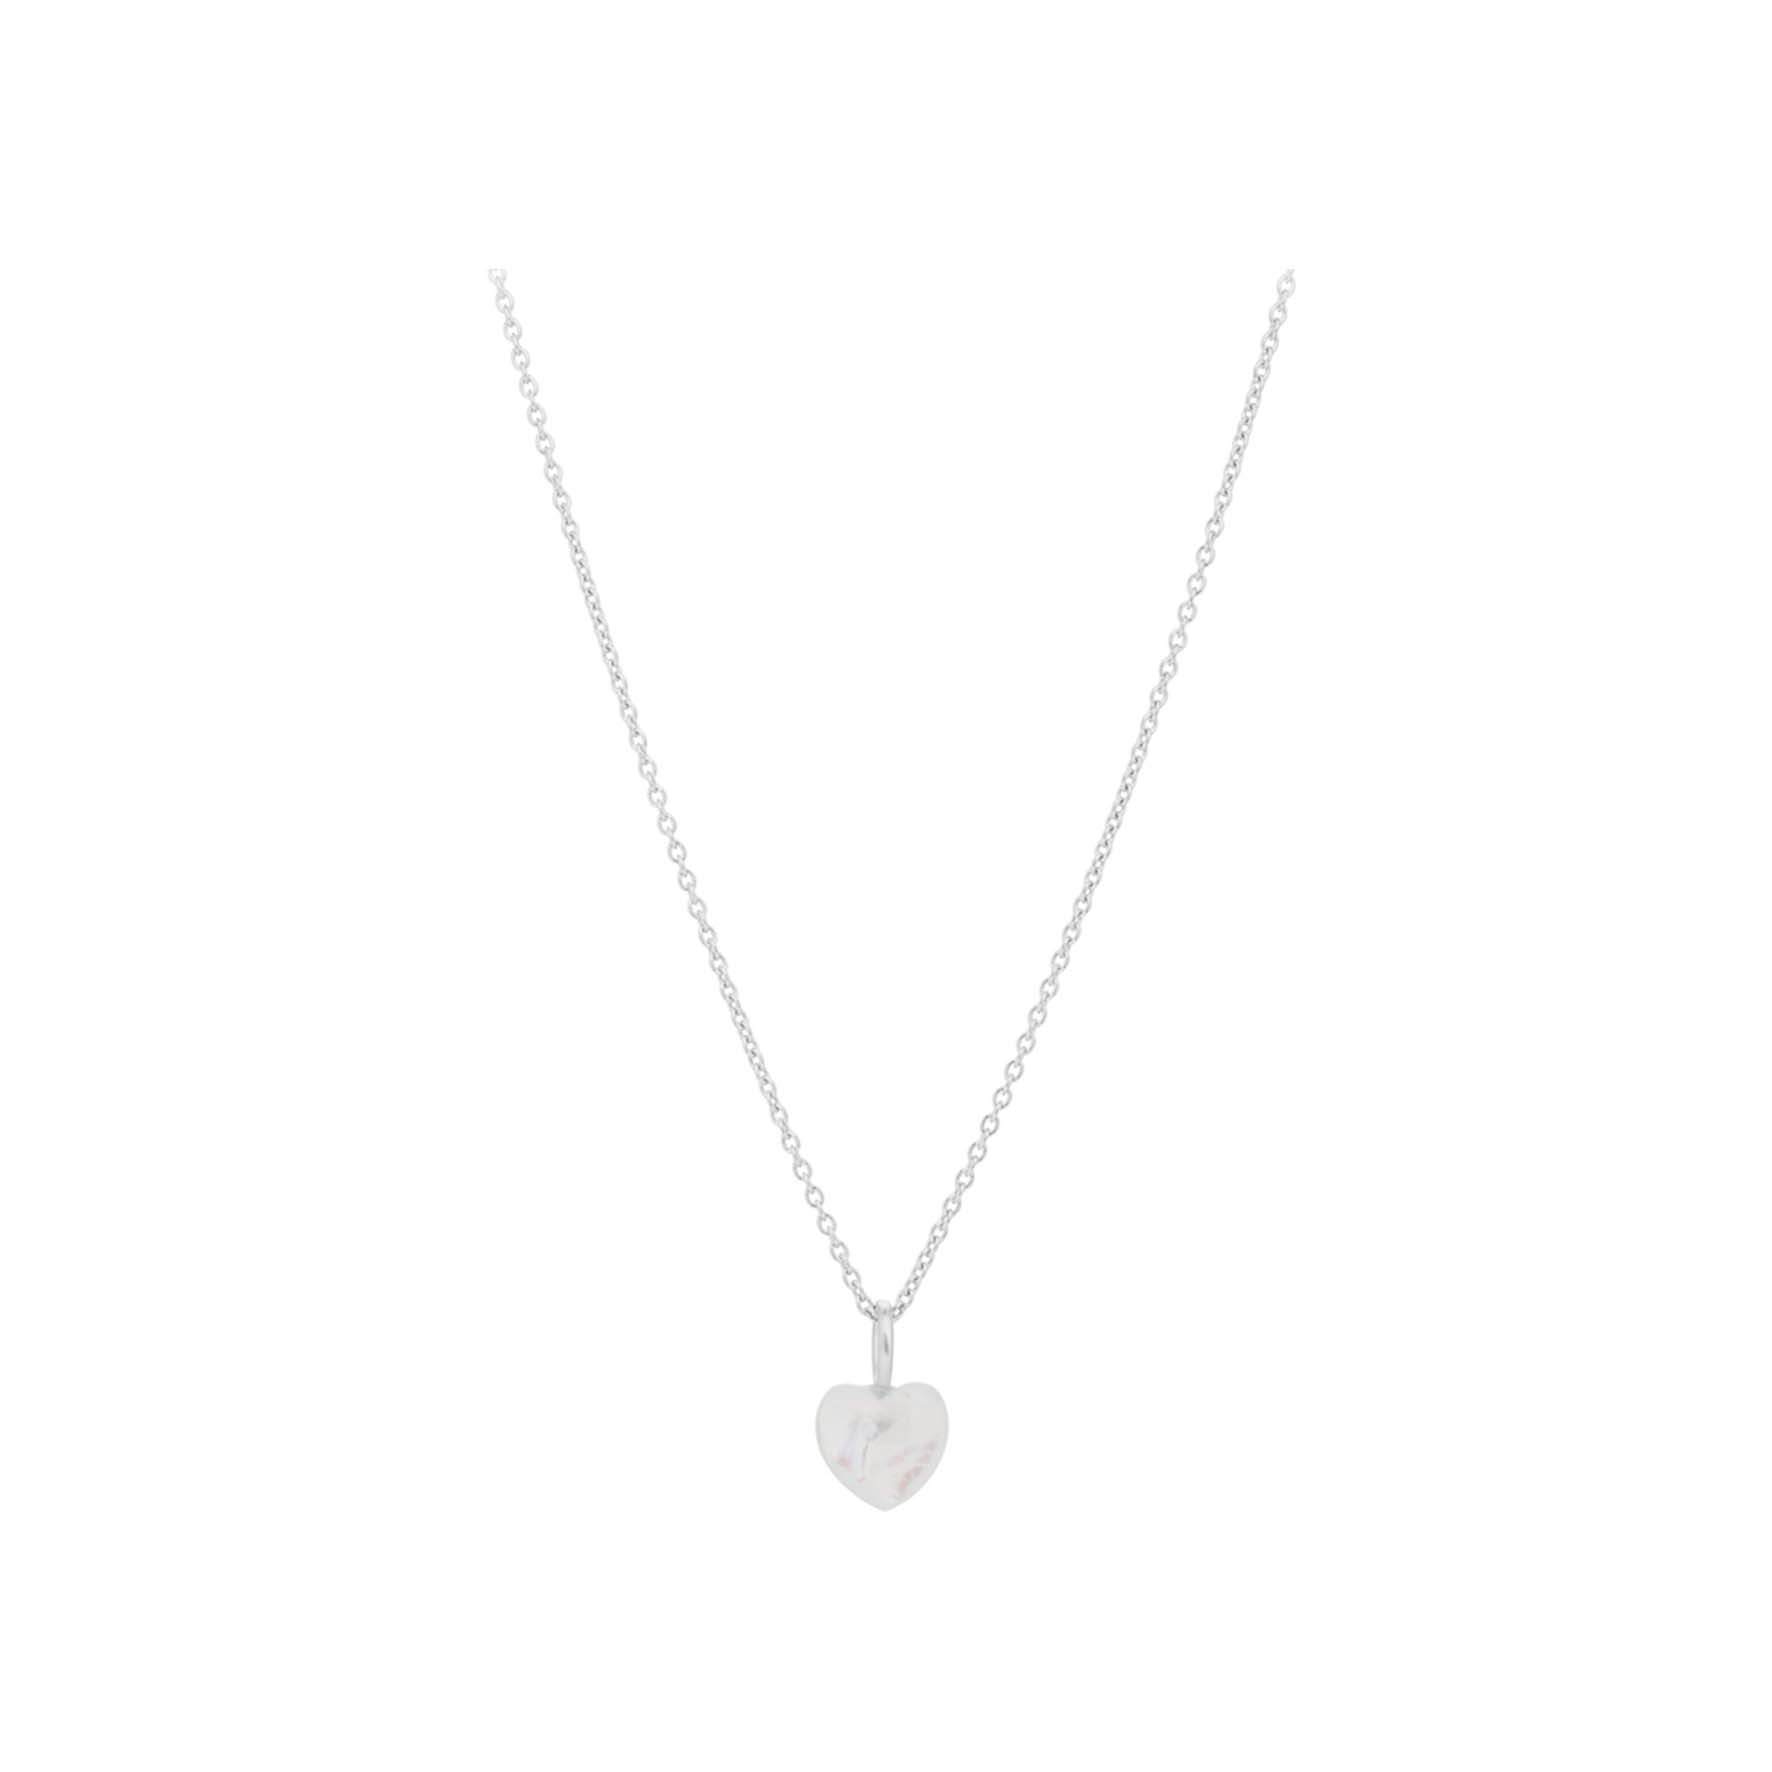 Ocean Heart Necklace von Pernille Corydon in Silber Sterling 925